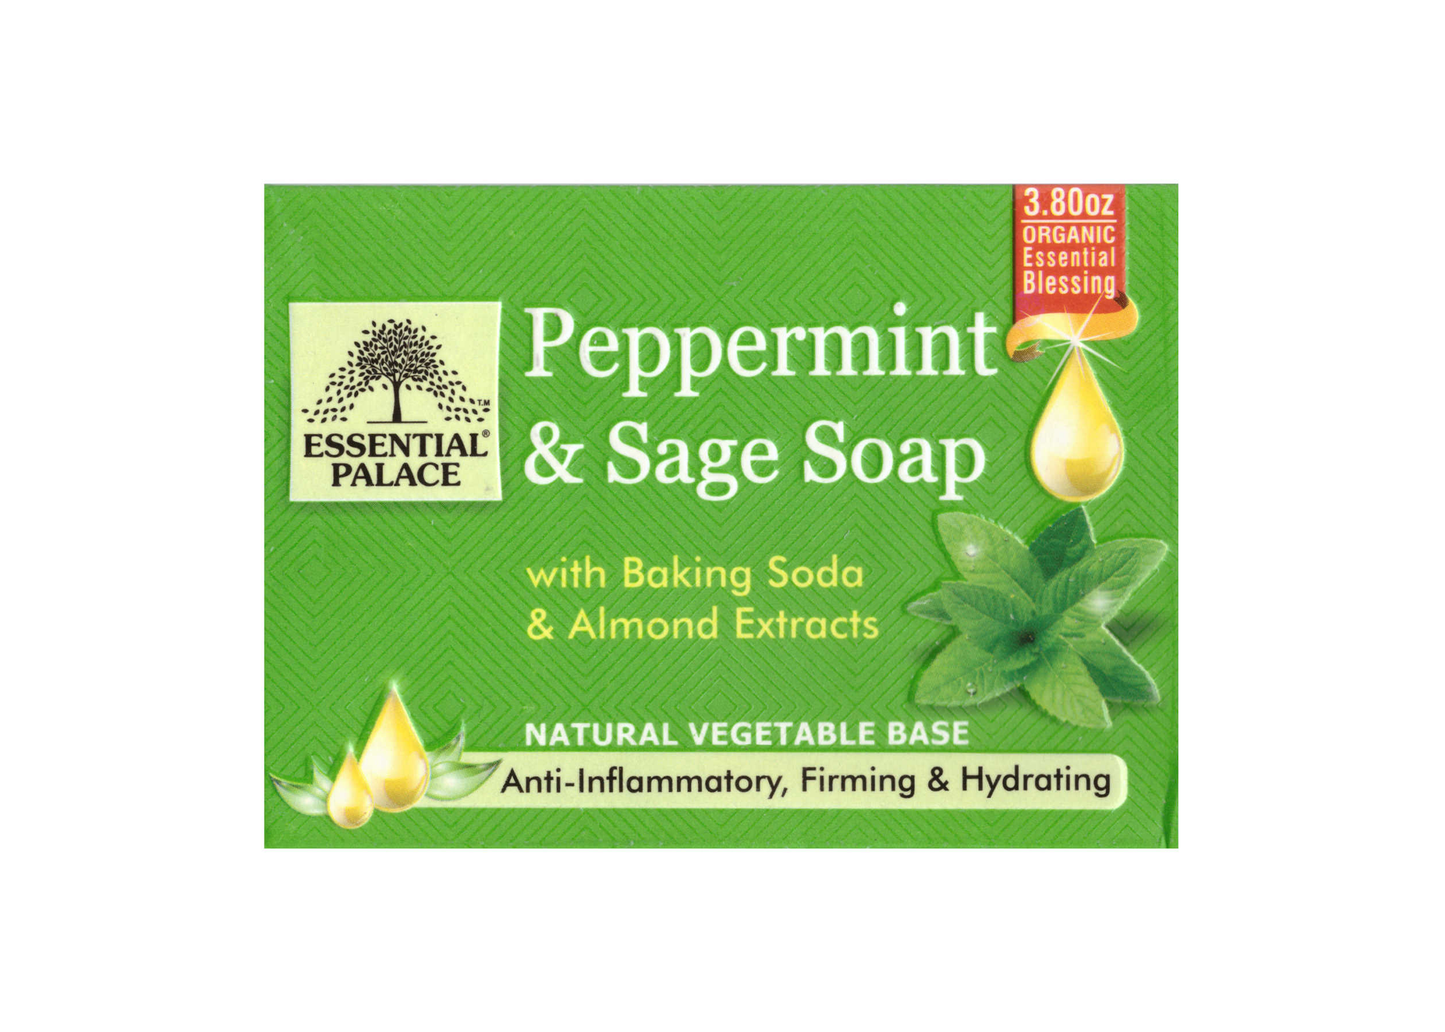 Peppermint & Sage Soap